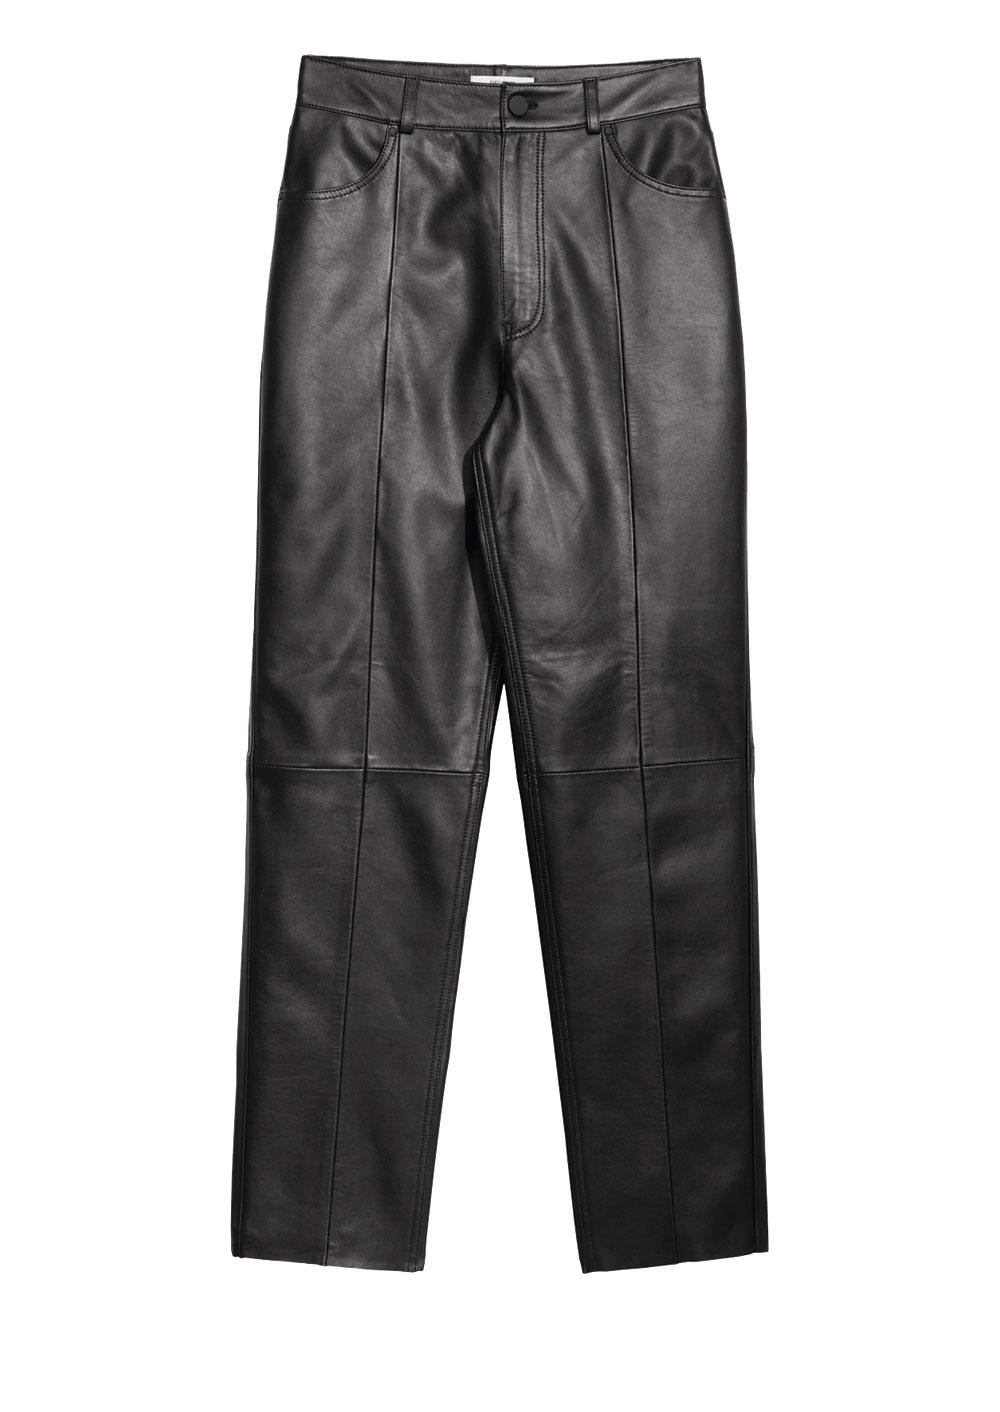 Pantalon en cuir,  & Other Stories, 295 euros